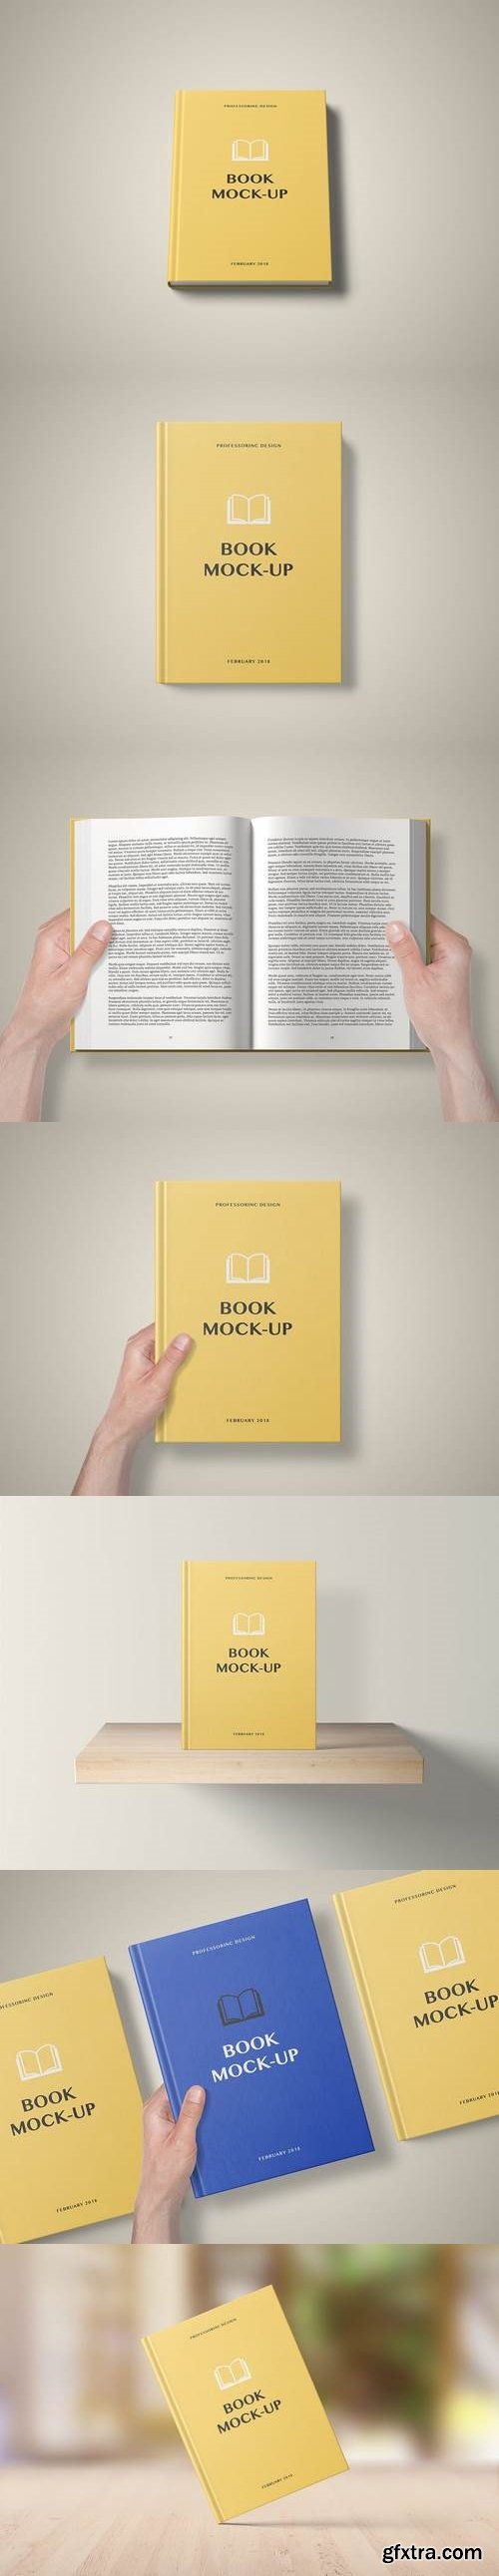 Book Mockup - Set 3